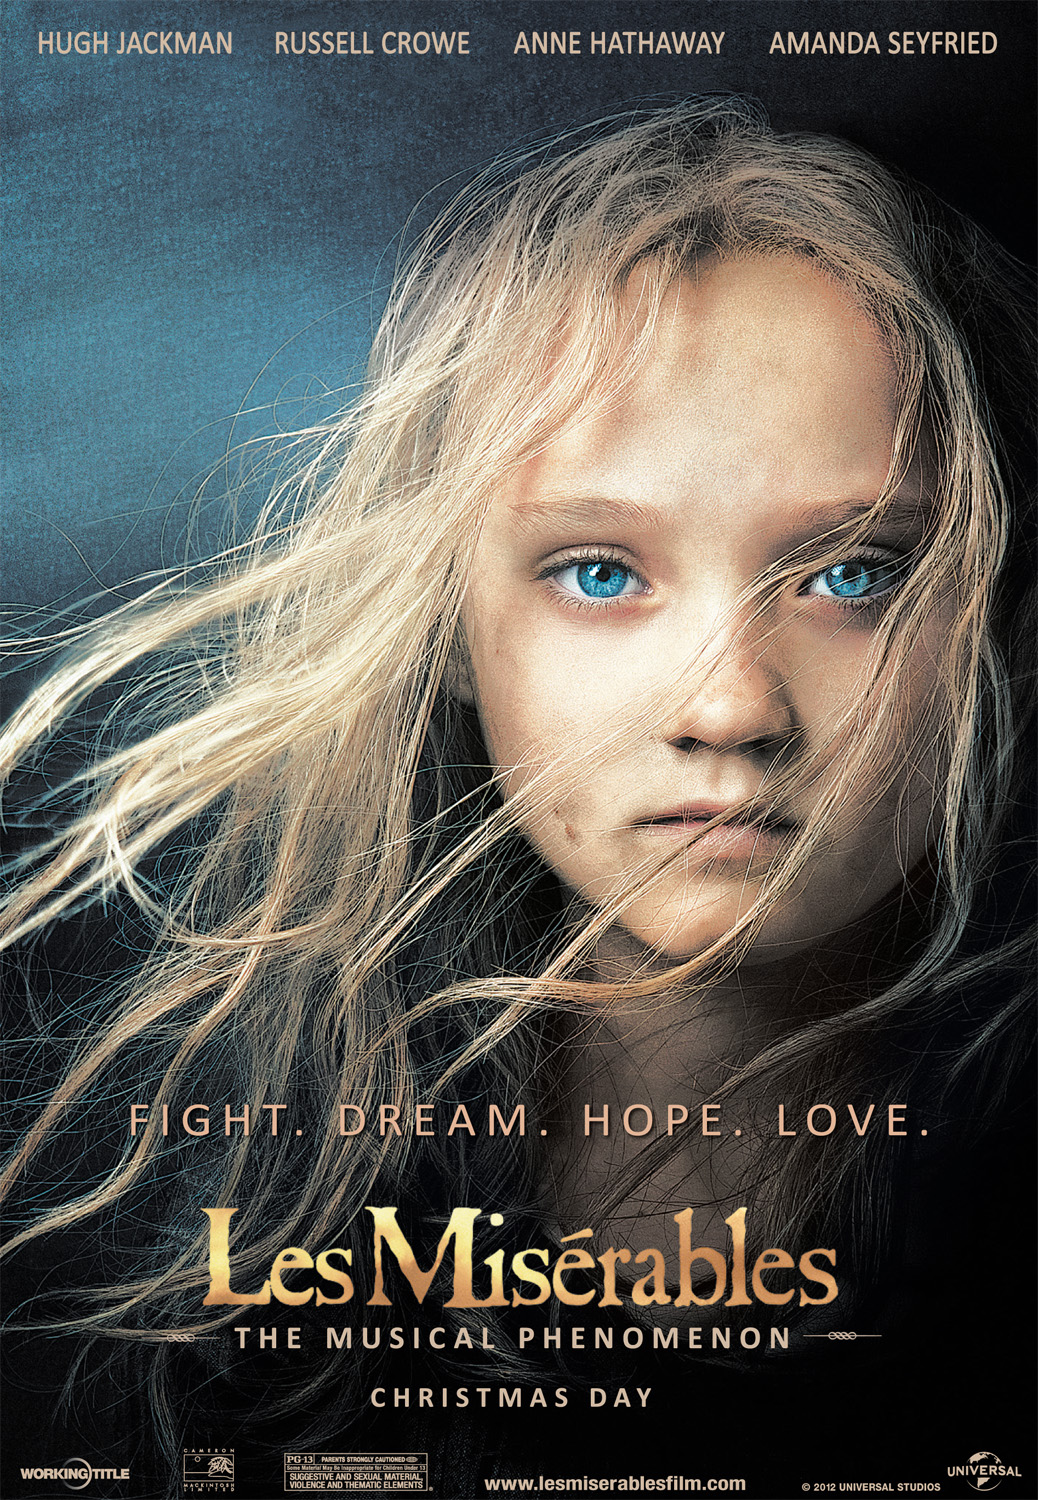 Les Miserables Film Straming ‘Les Misérables’ Opens December 25! Enter to Win Passes to the St